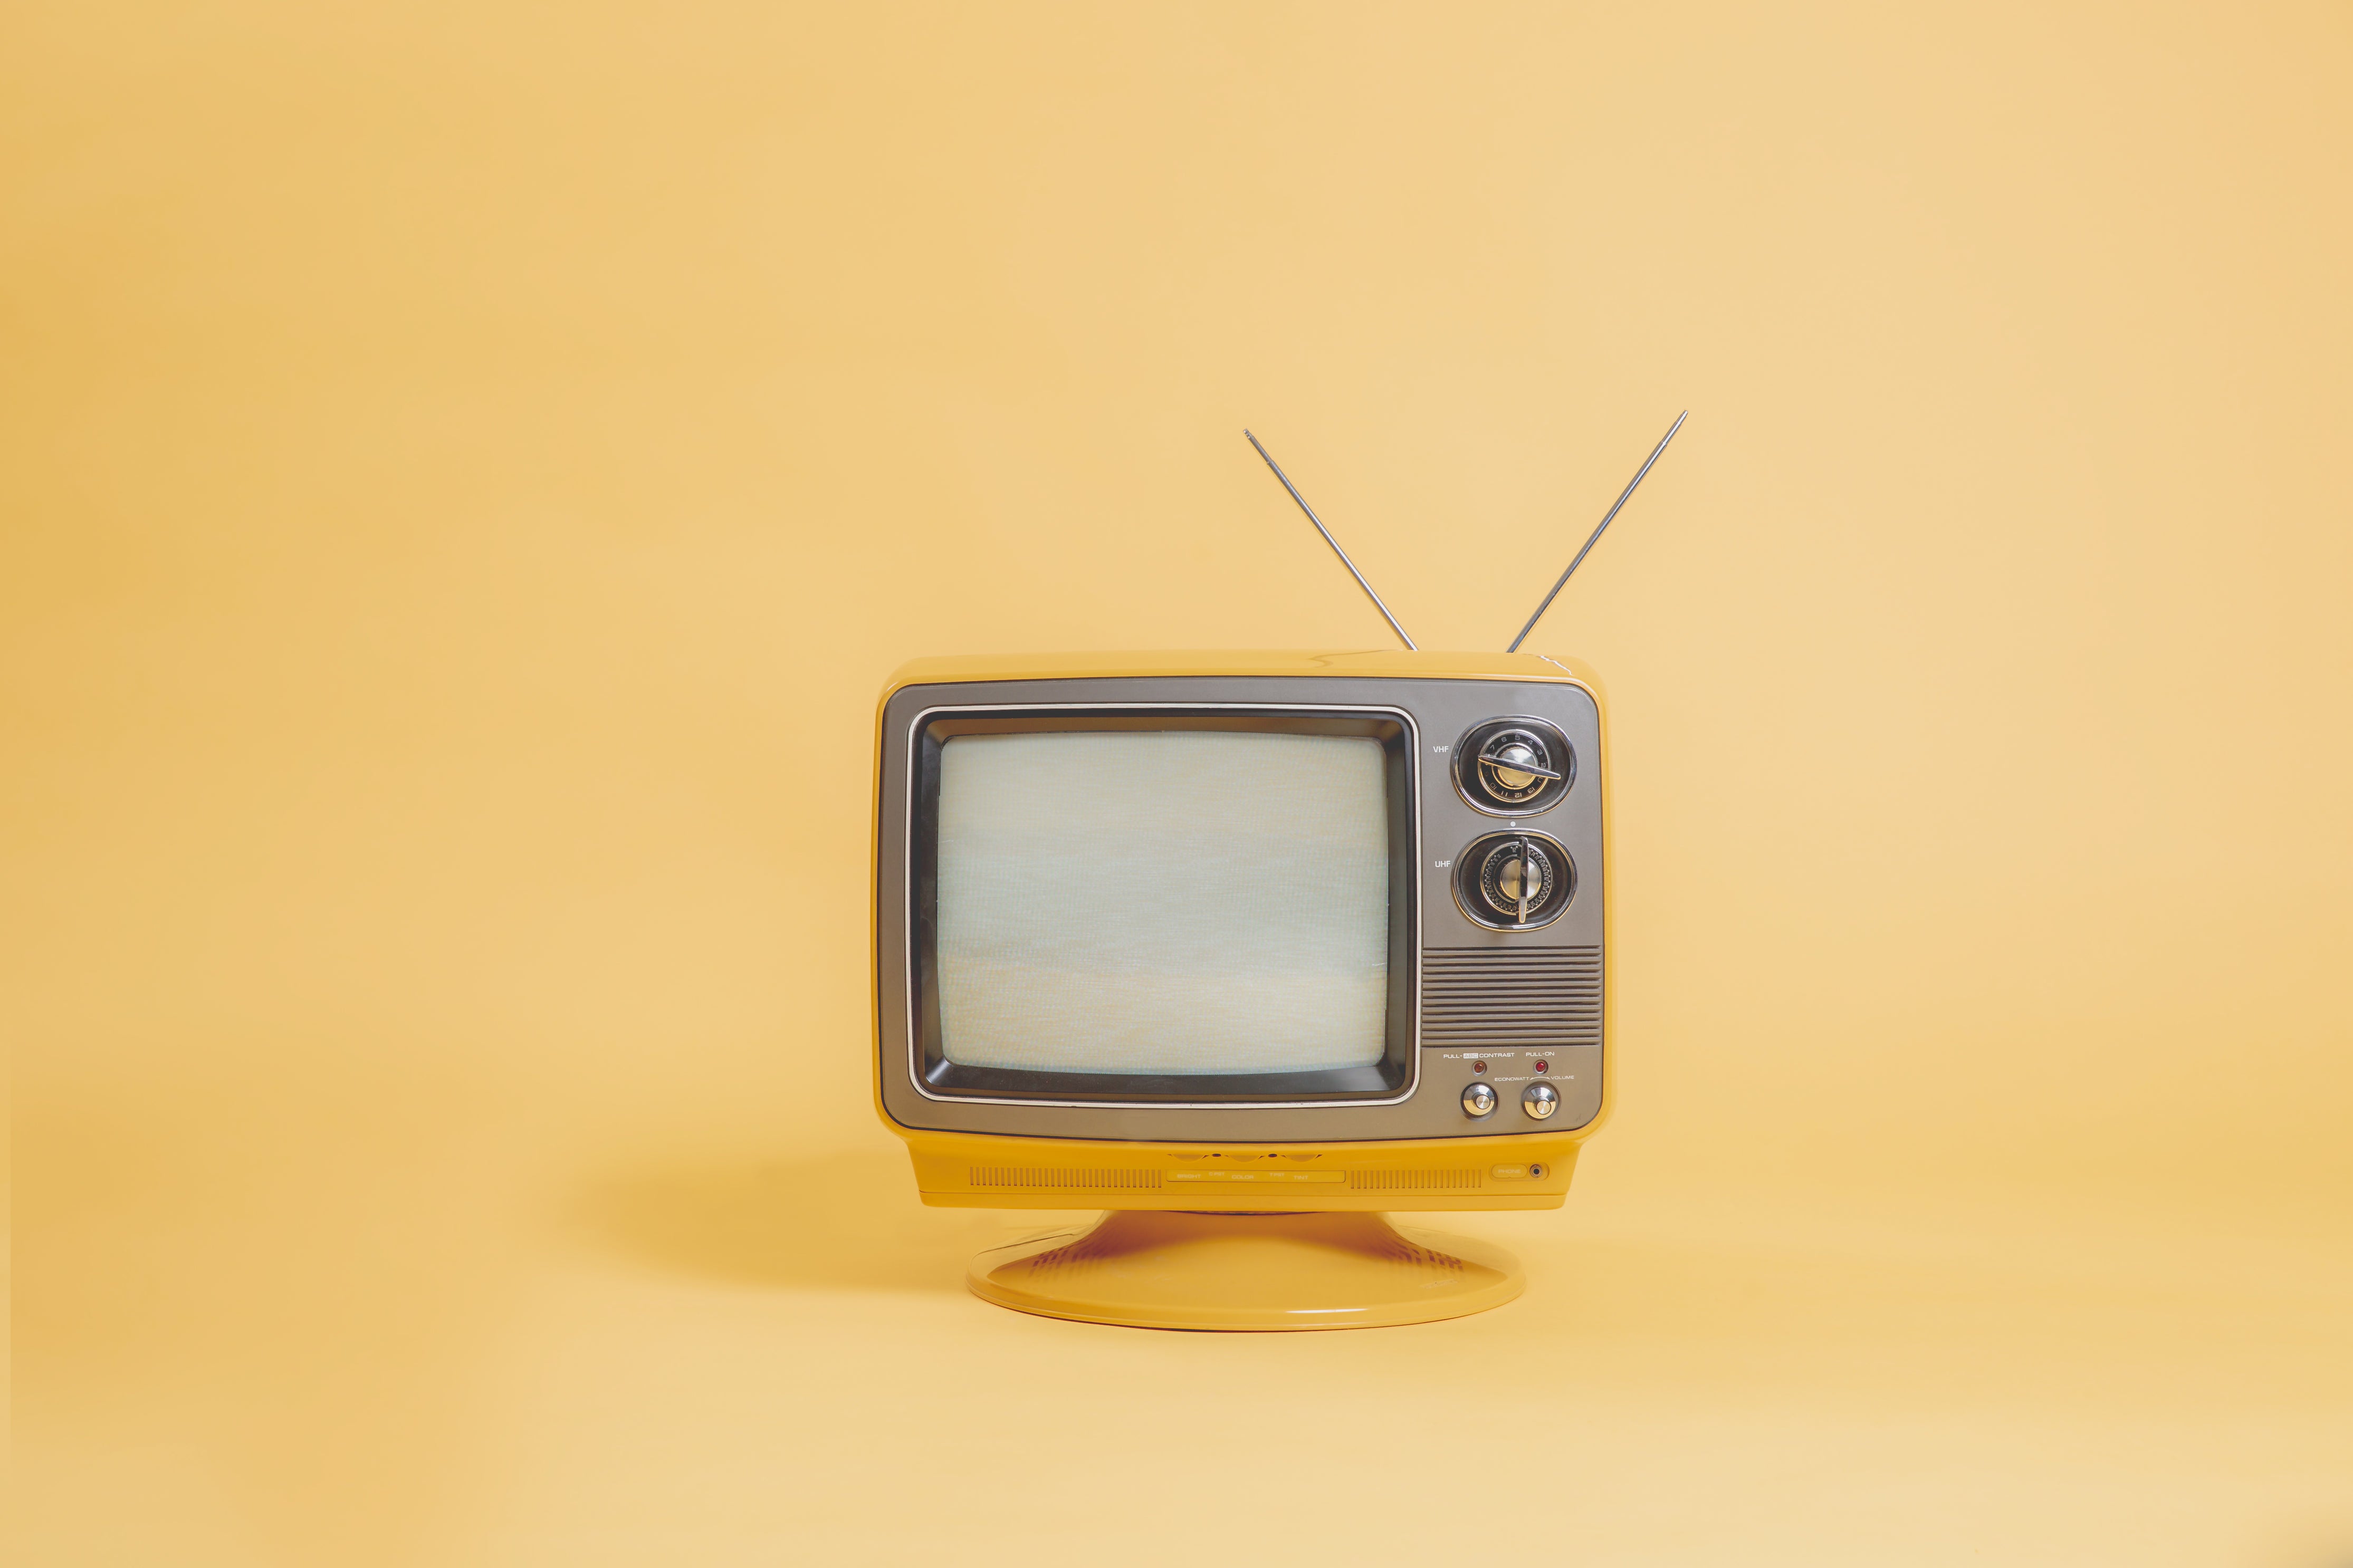 retro-television-set-with-antenna